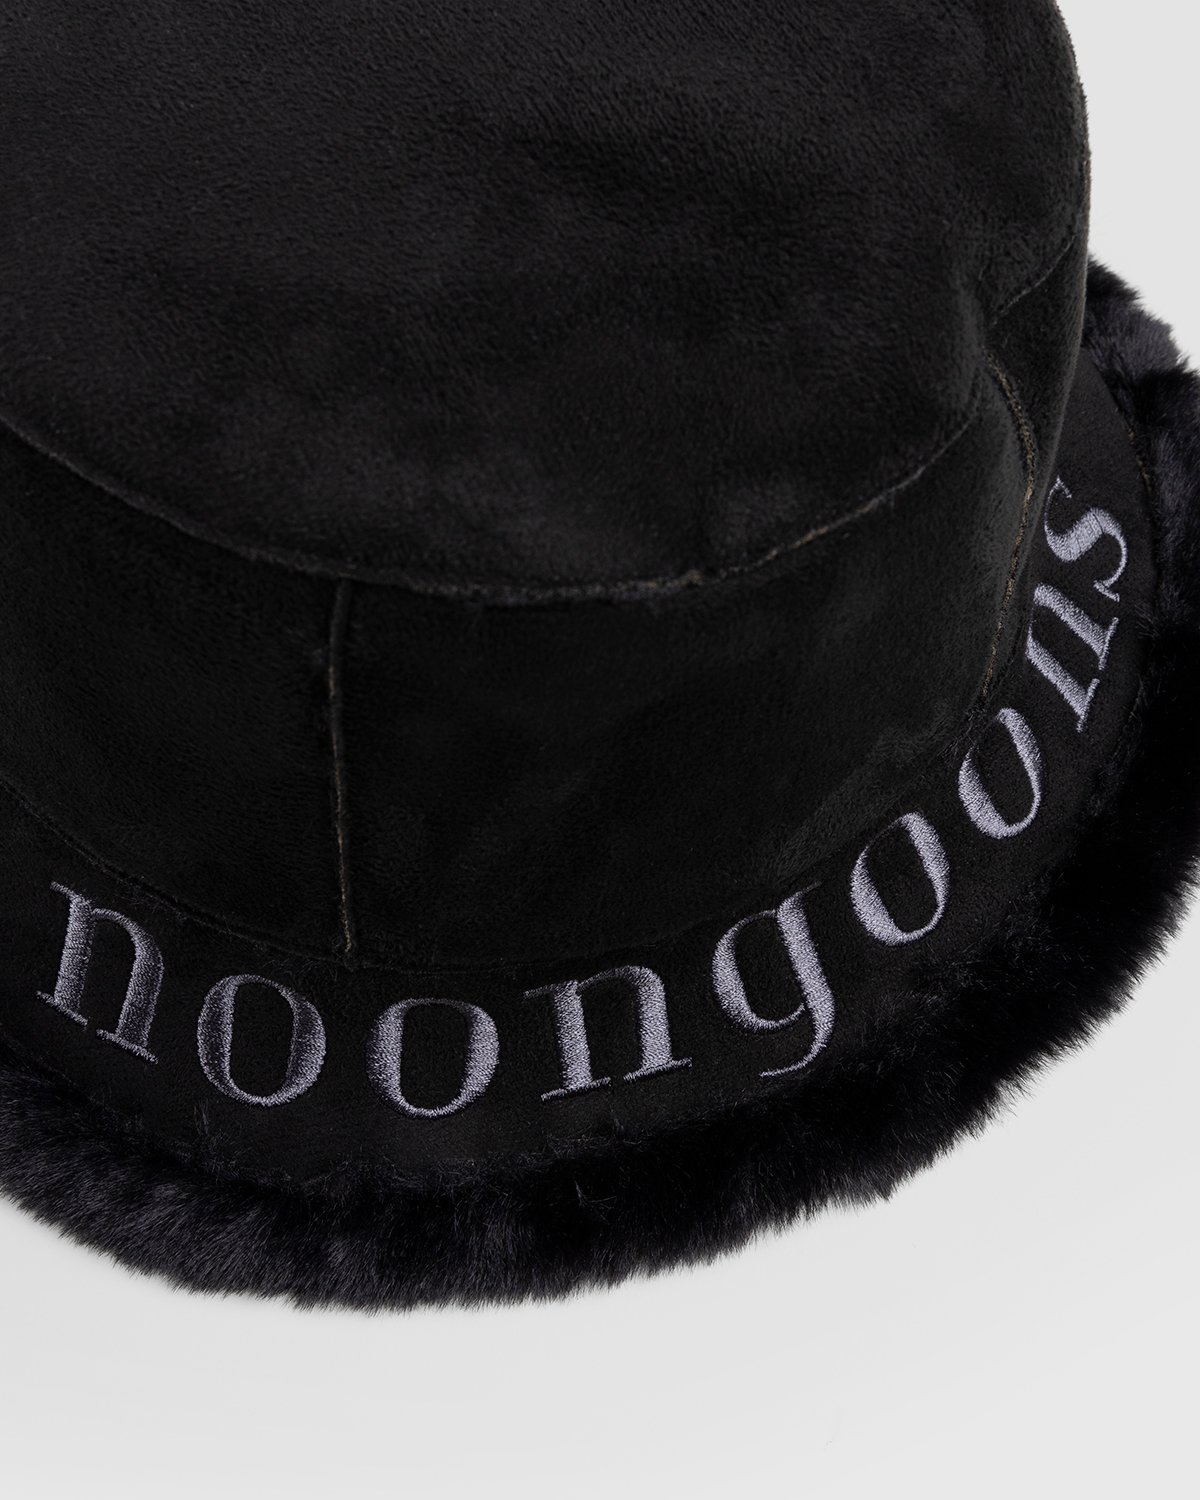 Noon Goons - Cosmic Hat Black - Accessories - Black - Image 3